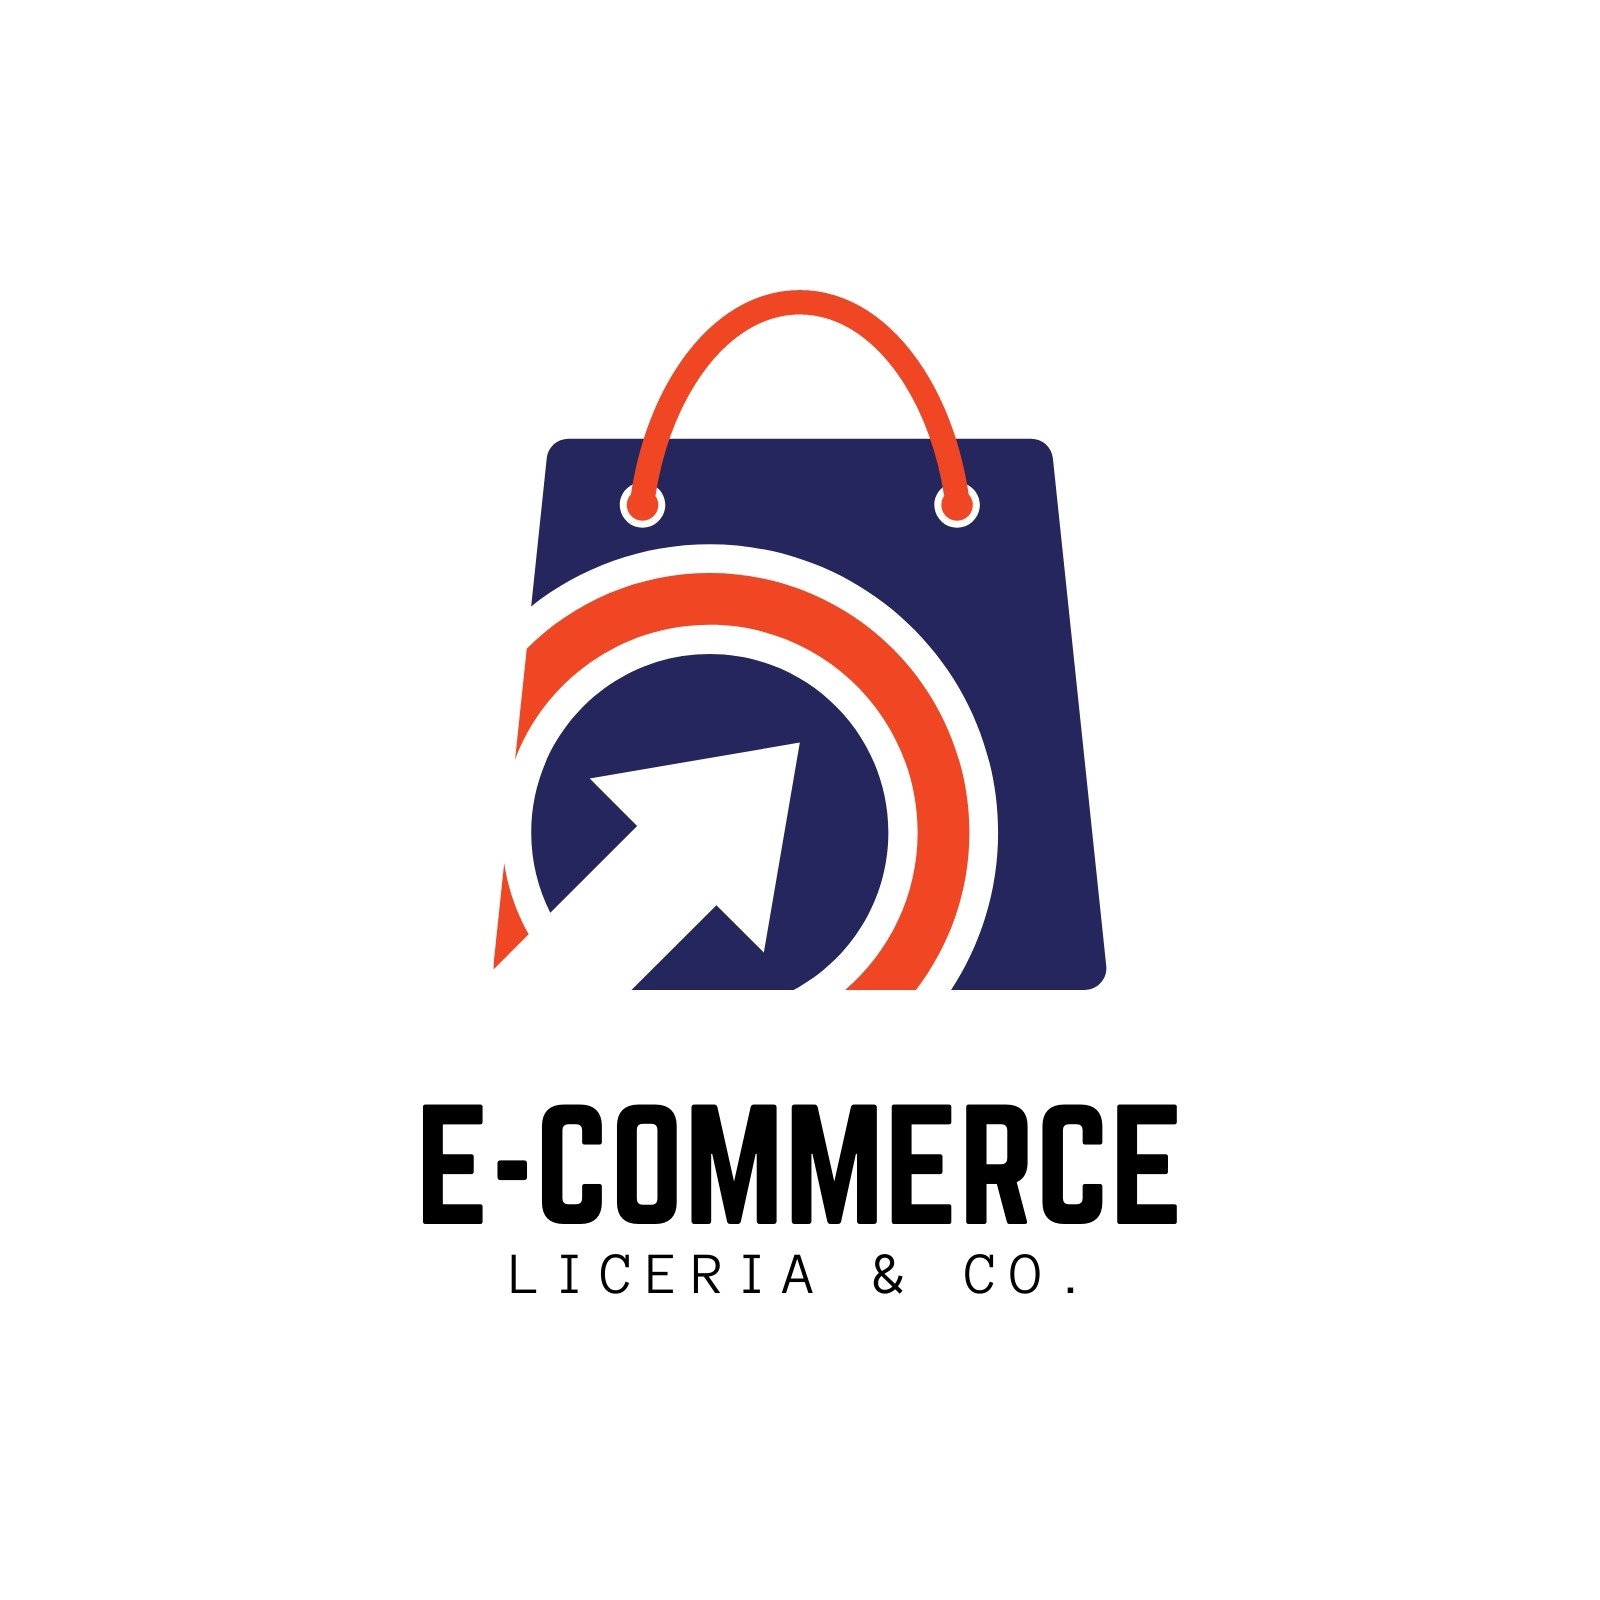 ecommerce logo samples